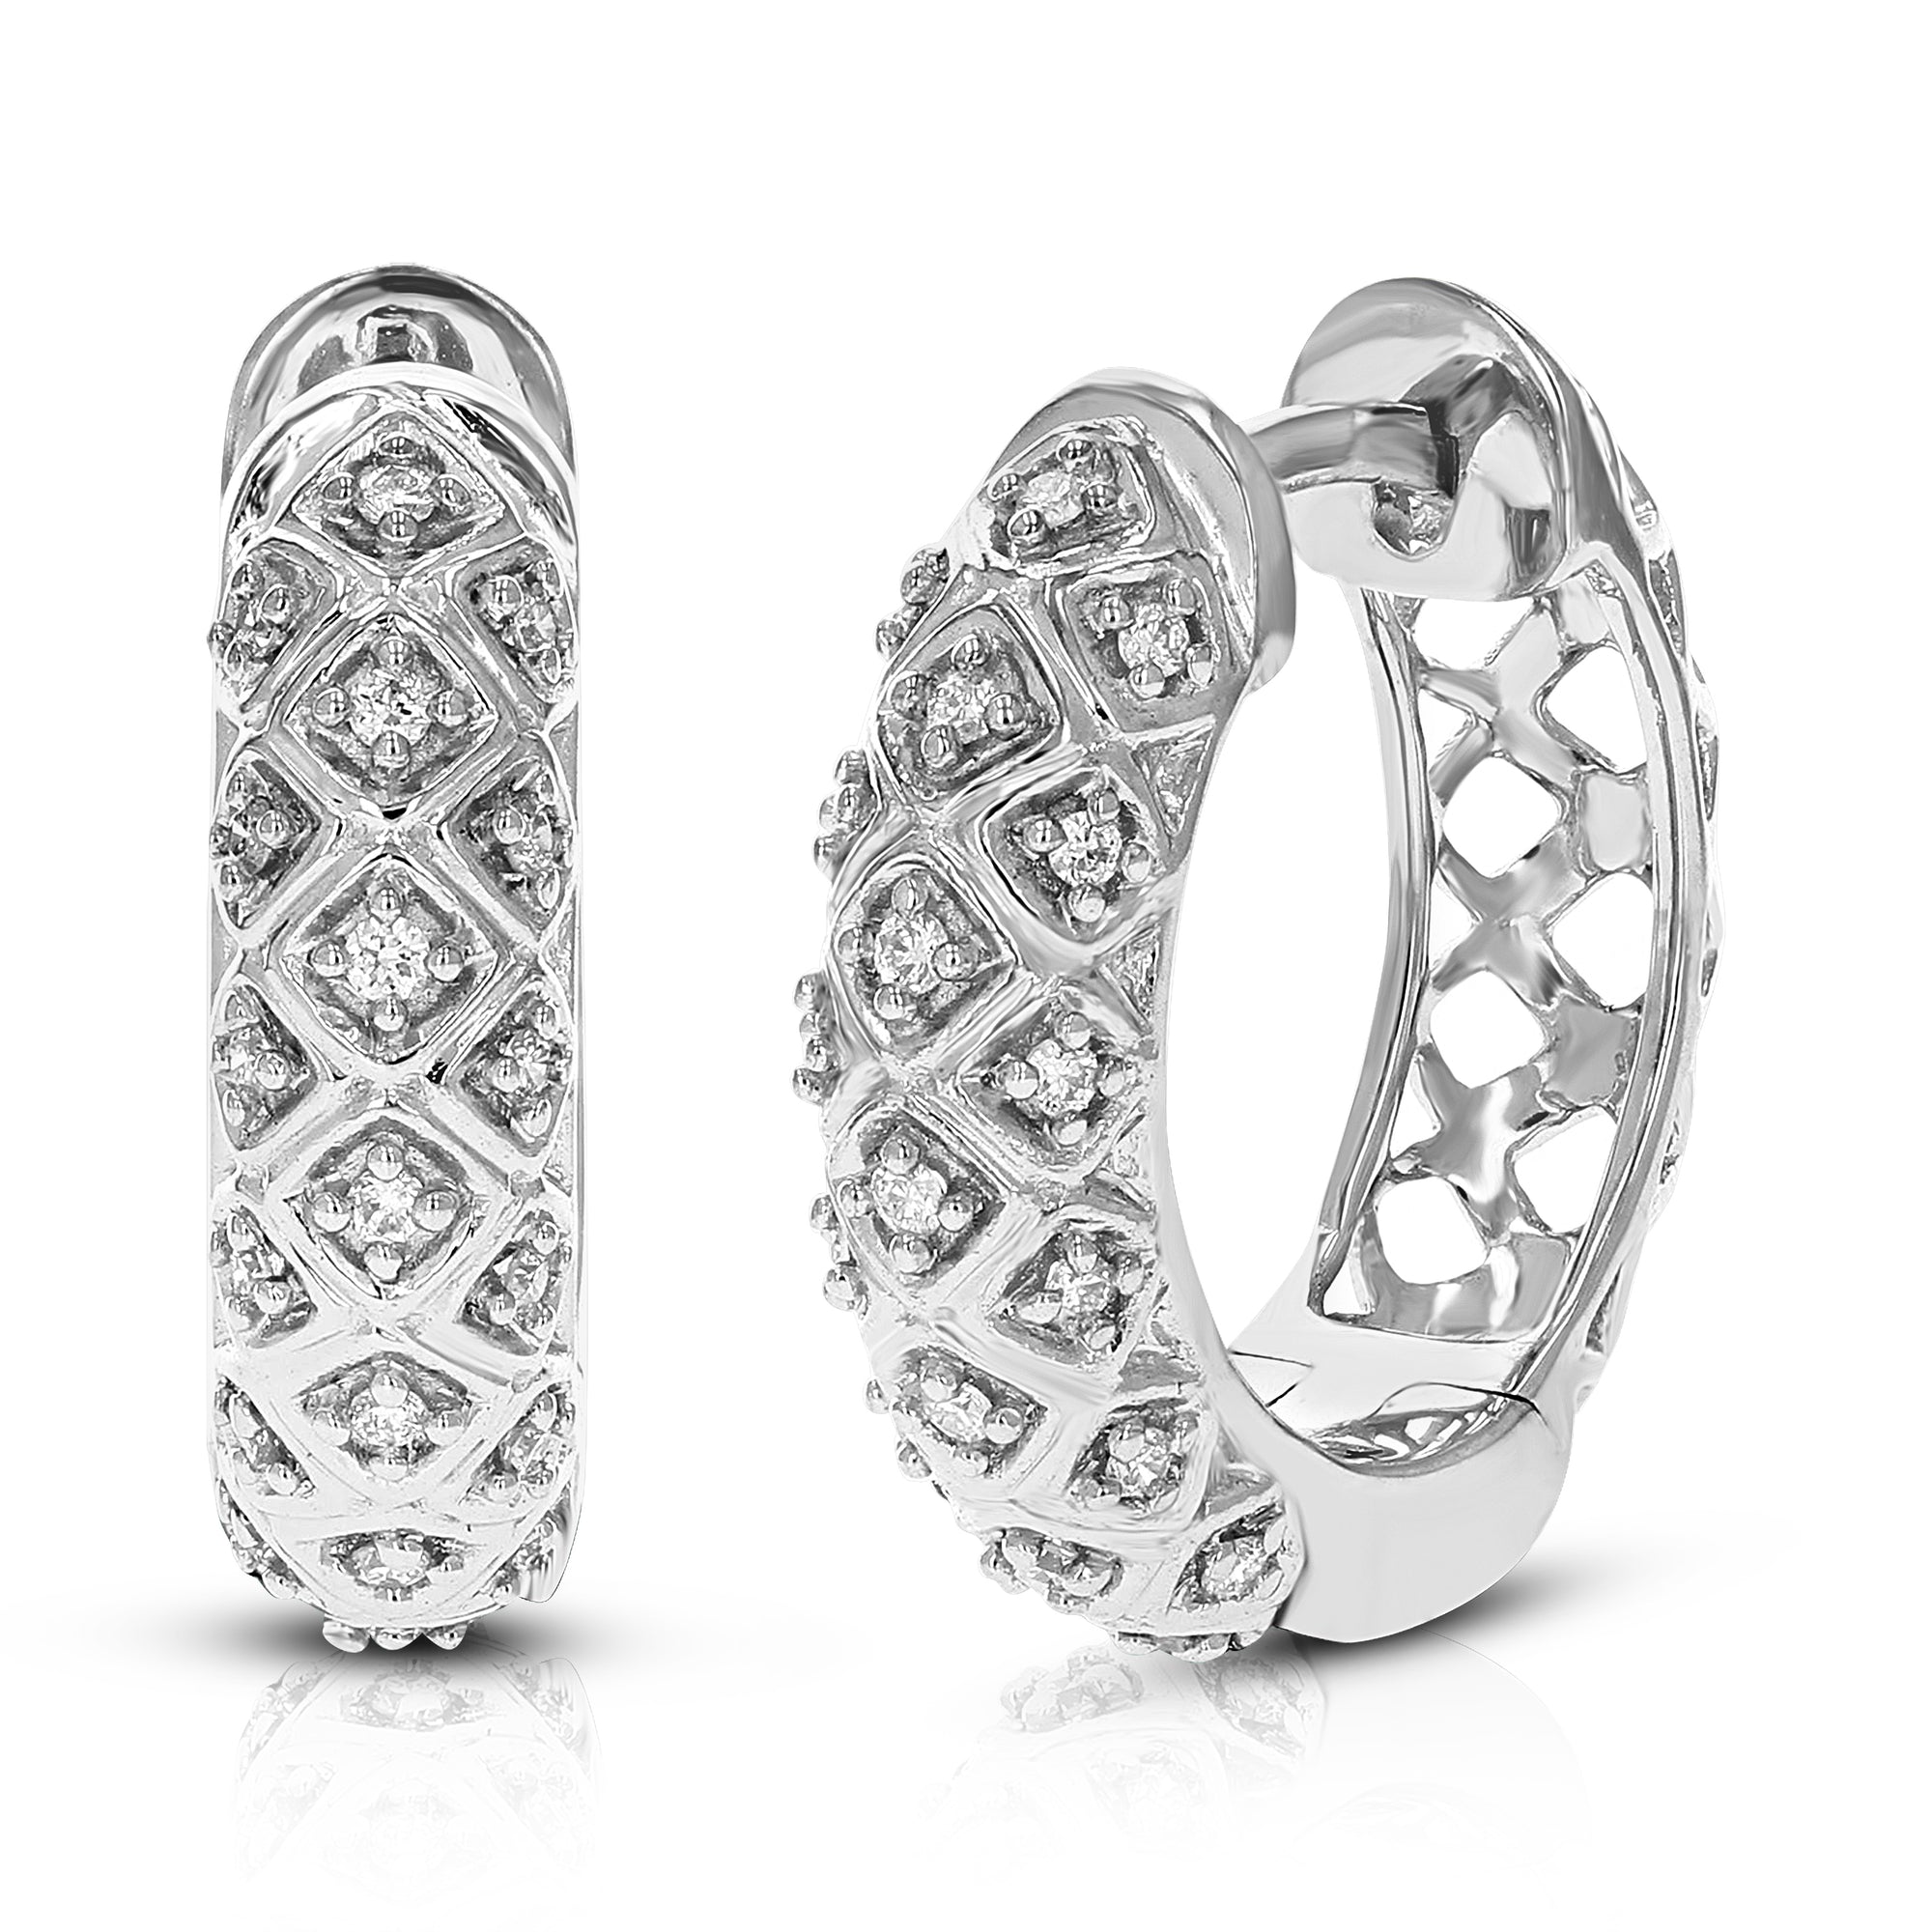 1/6 cttw Diamond Hoop Earrings for Women, Round Lab Grown Diamond Earrings in .925 Sterling Silver, Prong Setting, 2/3 Inch